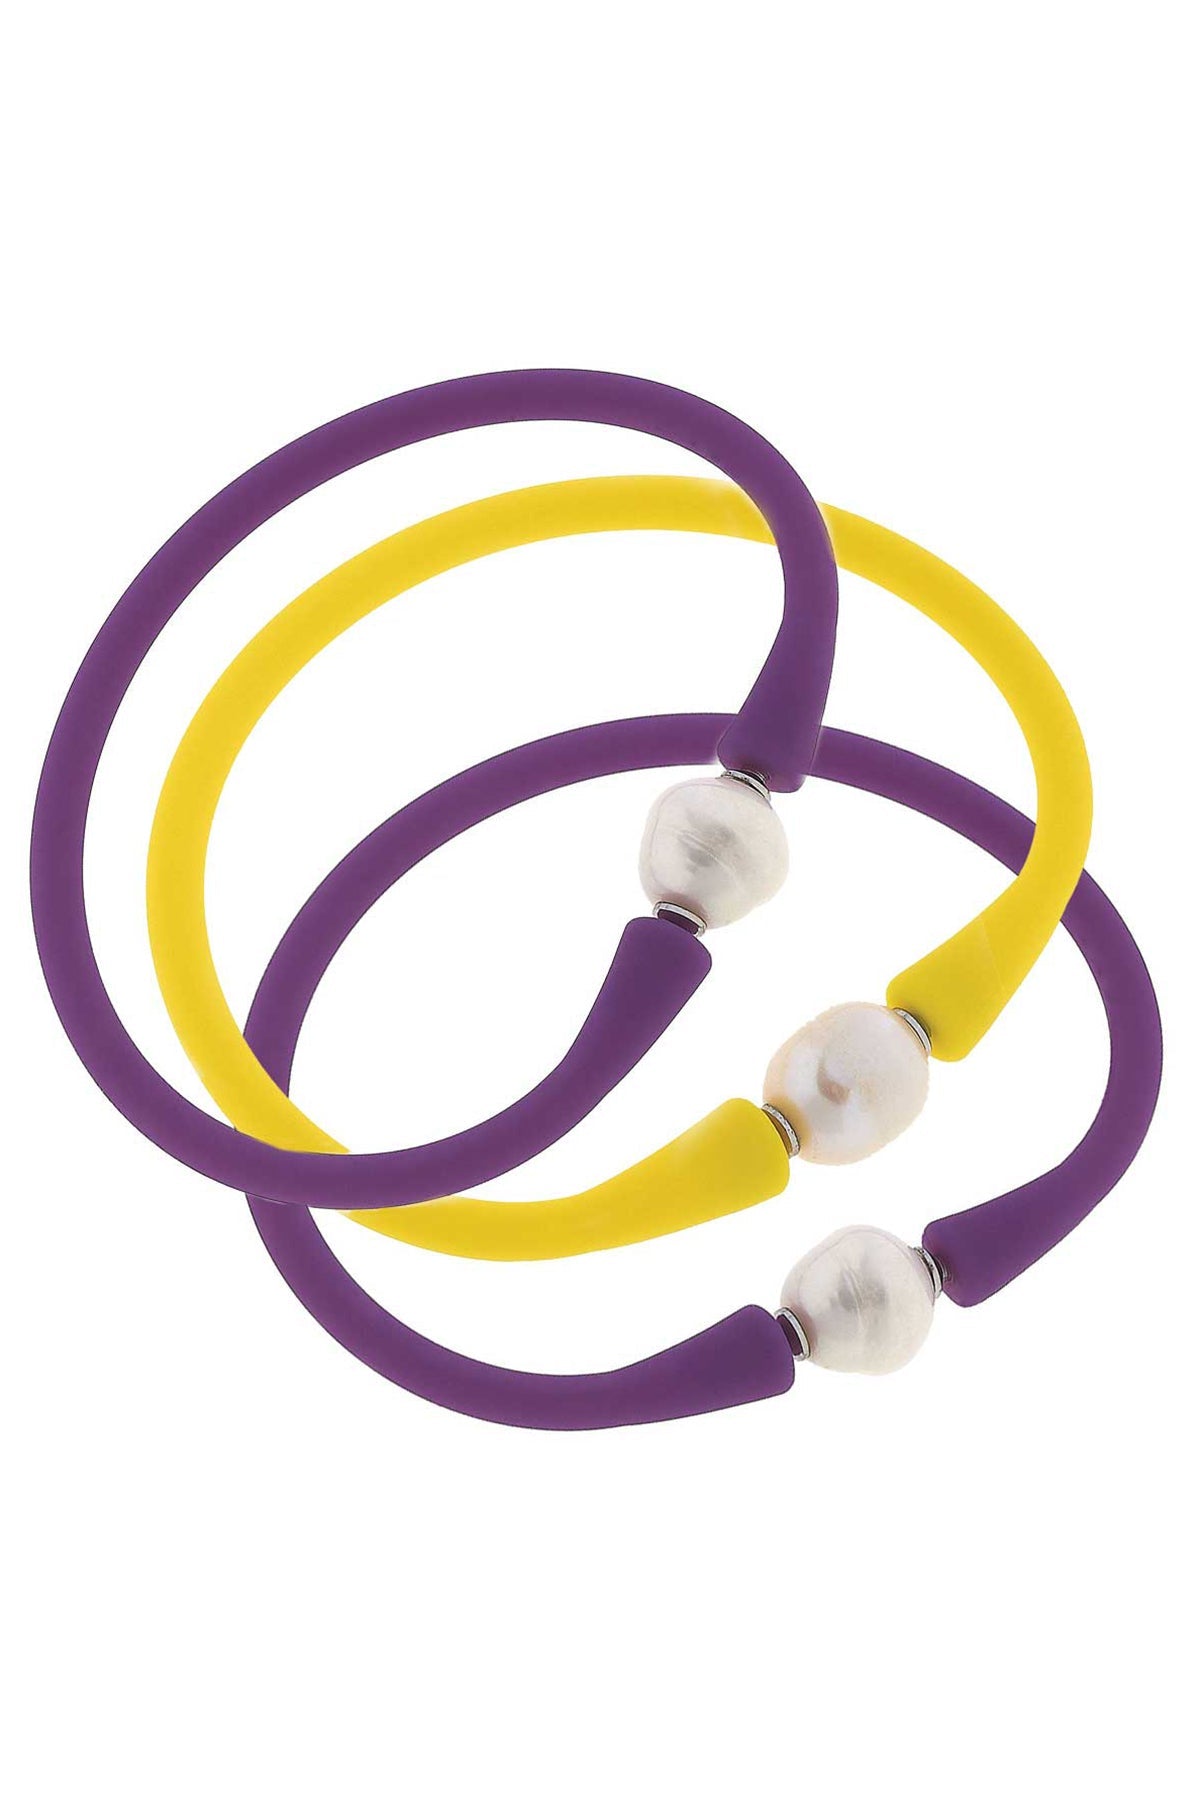 Bali Game Day Bracelet Set of 3 in Purple & Yellow